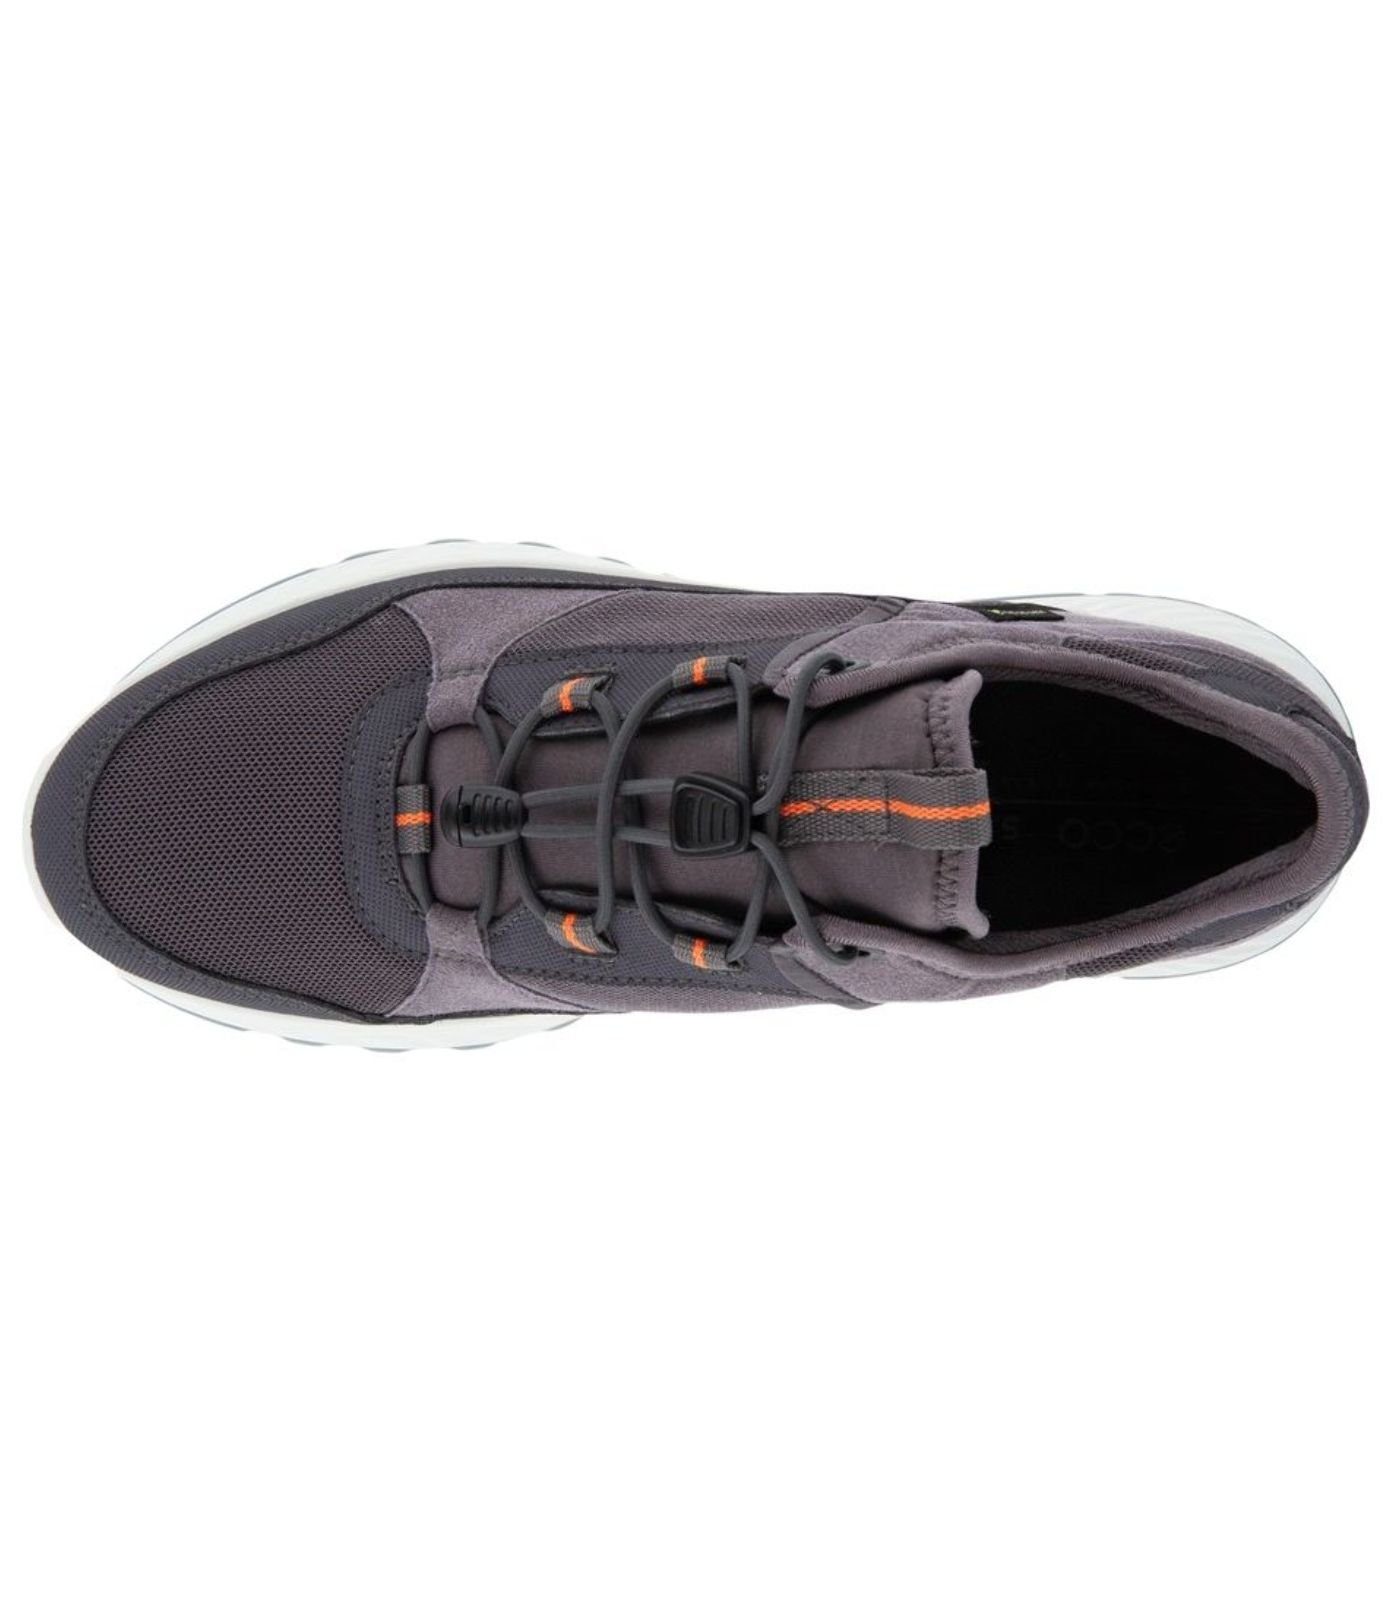 Lederimitat/Textil grau Sneaker Sneaker Ecco